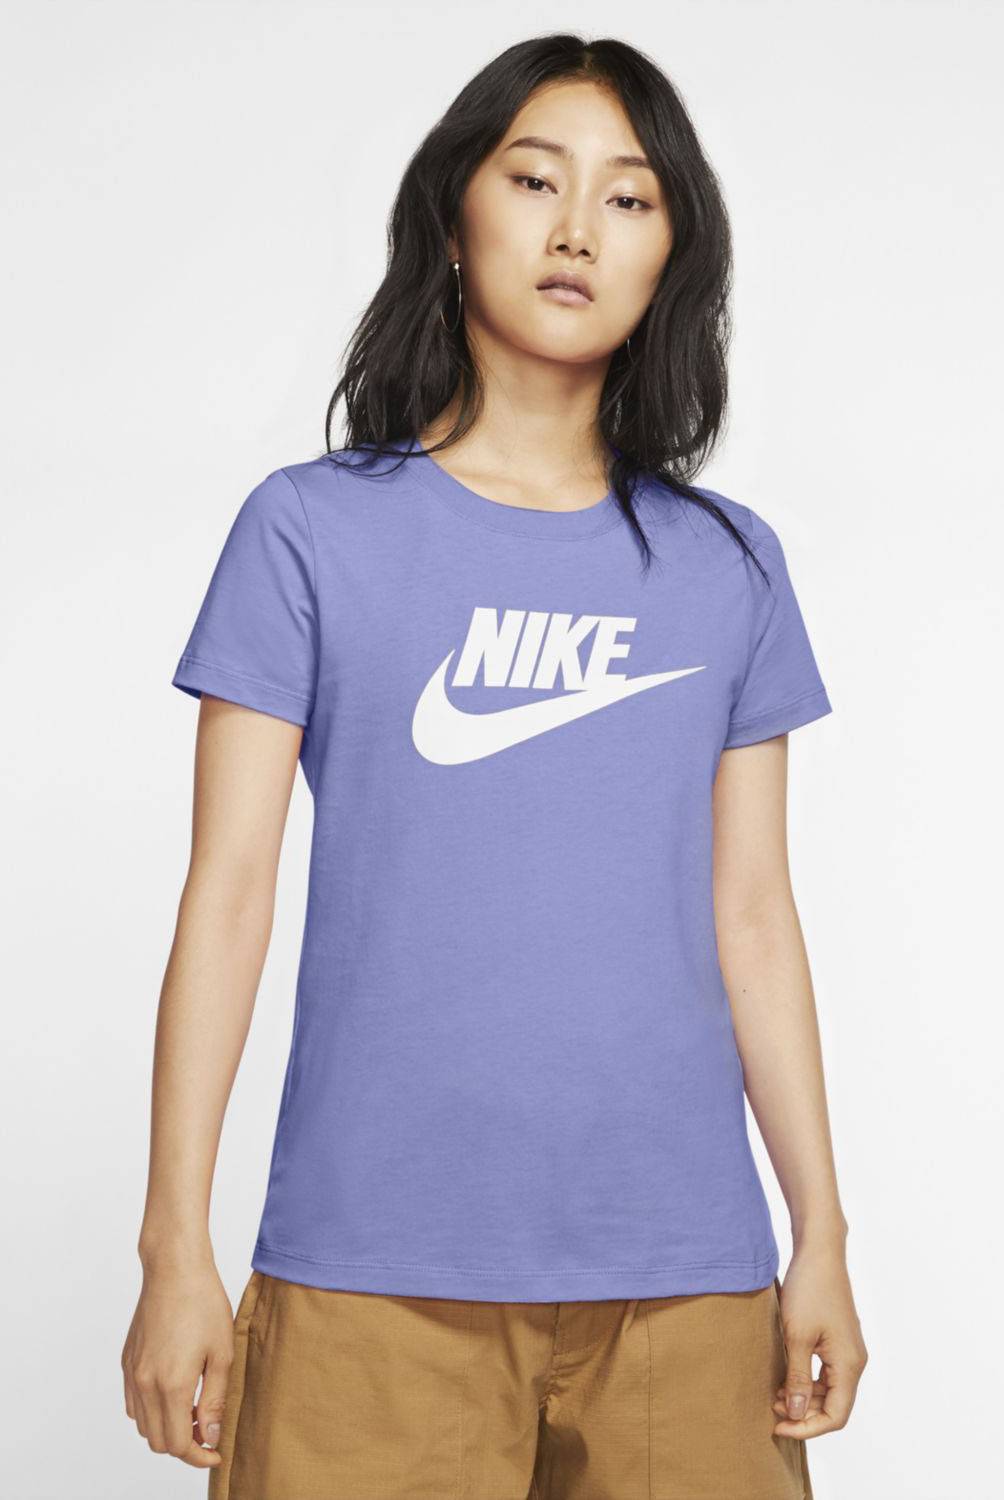 Nike - Nike Sports T-Shirts Mujer